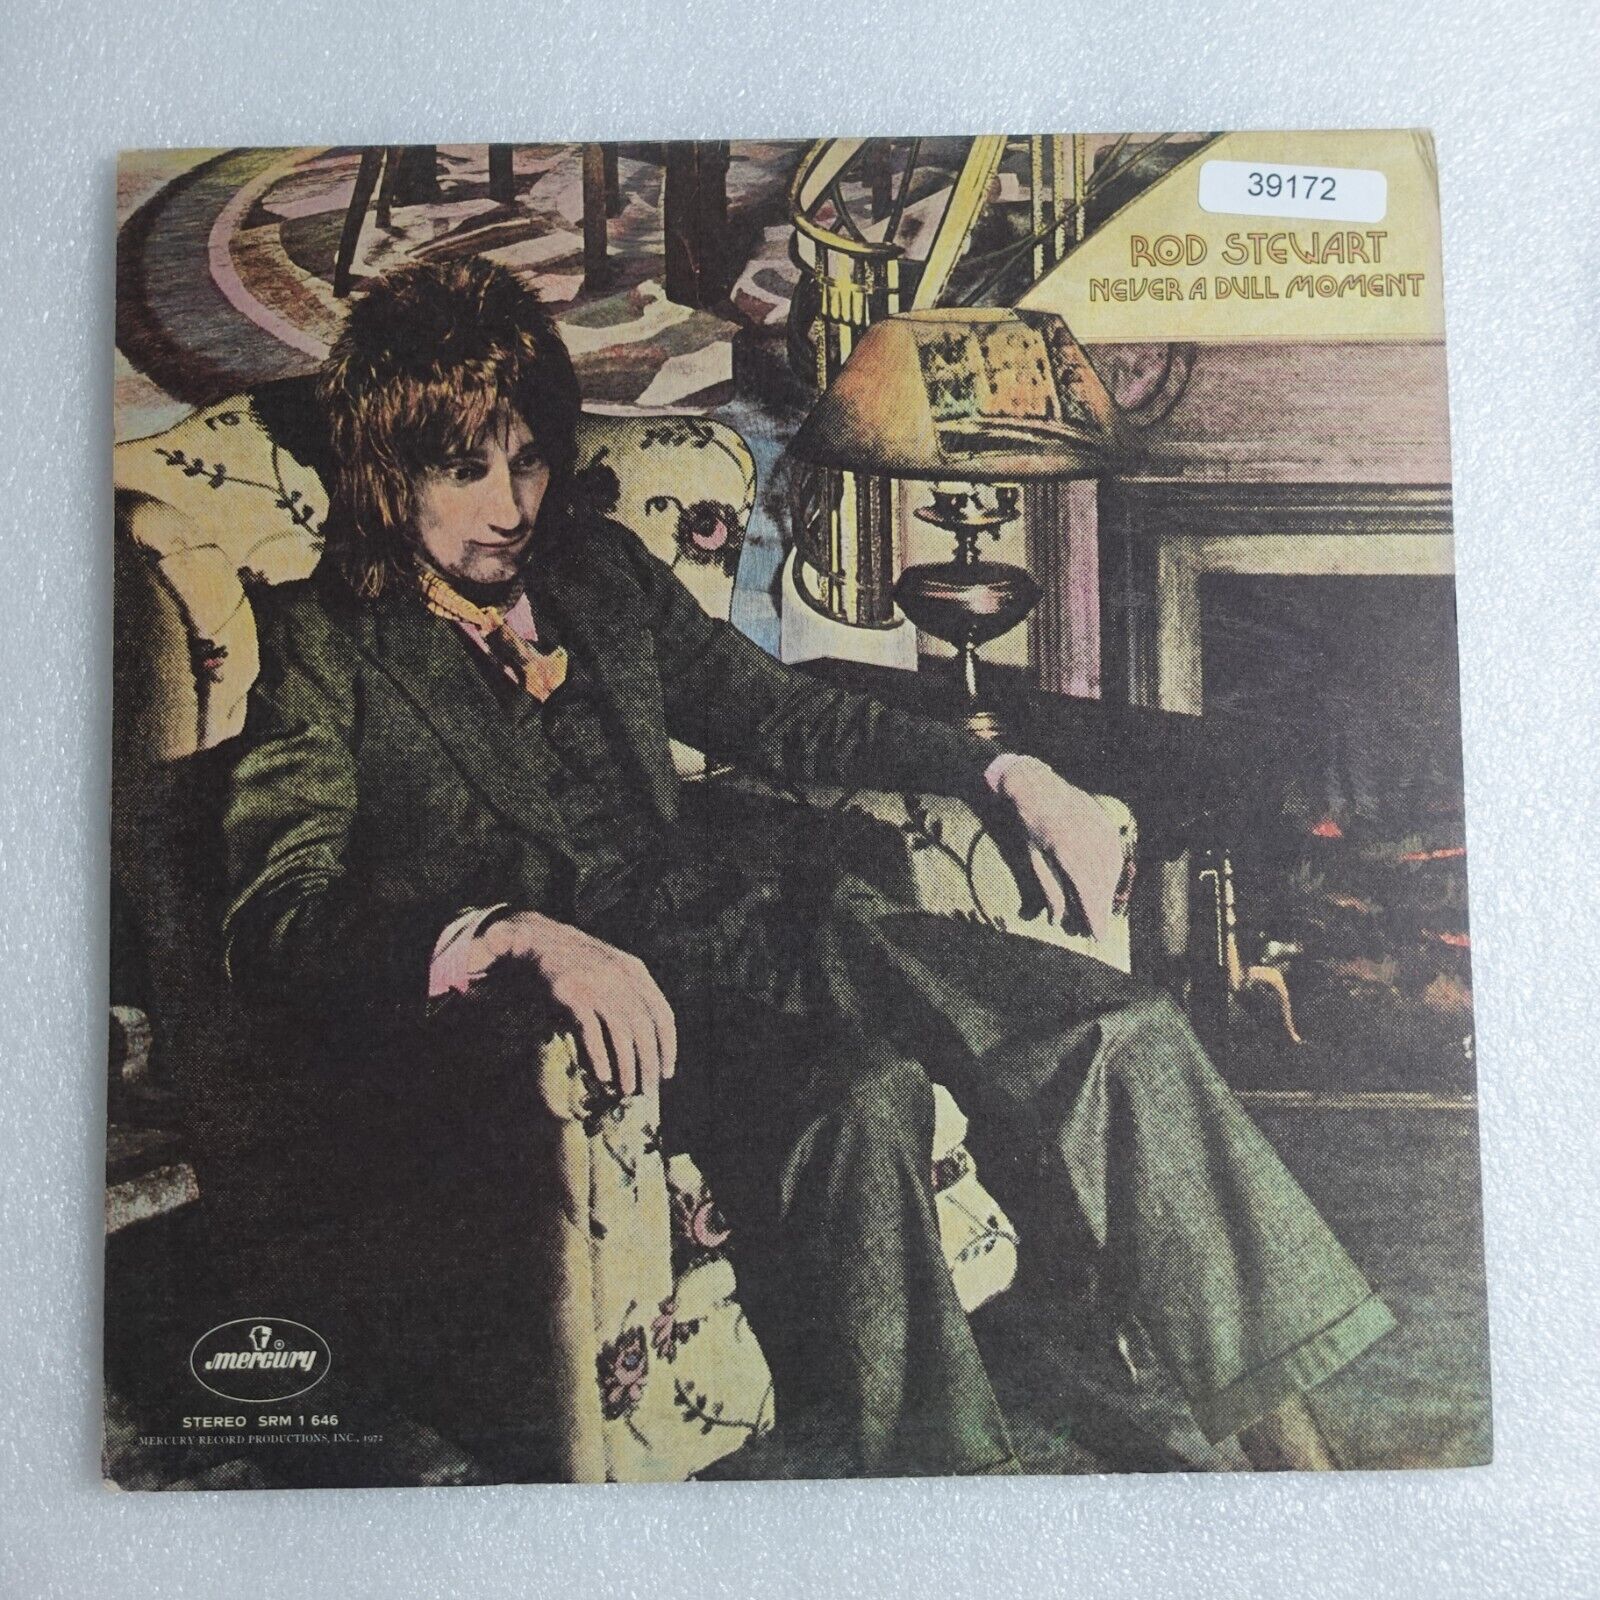 Rod Stewart Never A Dull Moment LP Vinyl Record Album